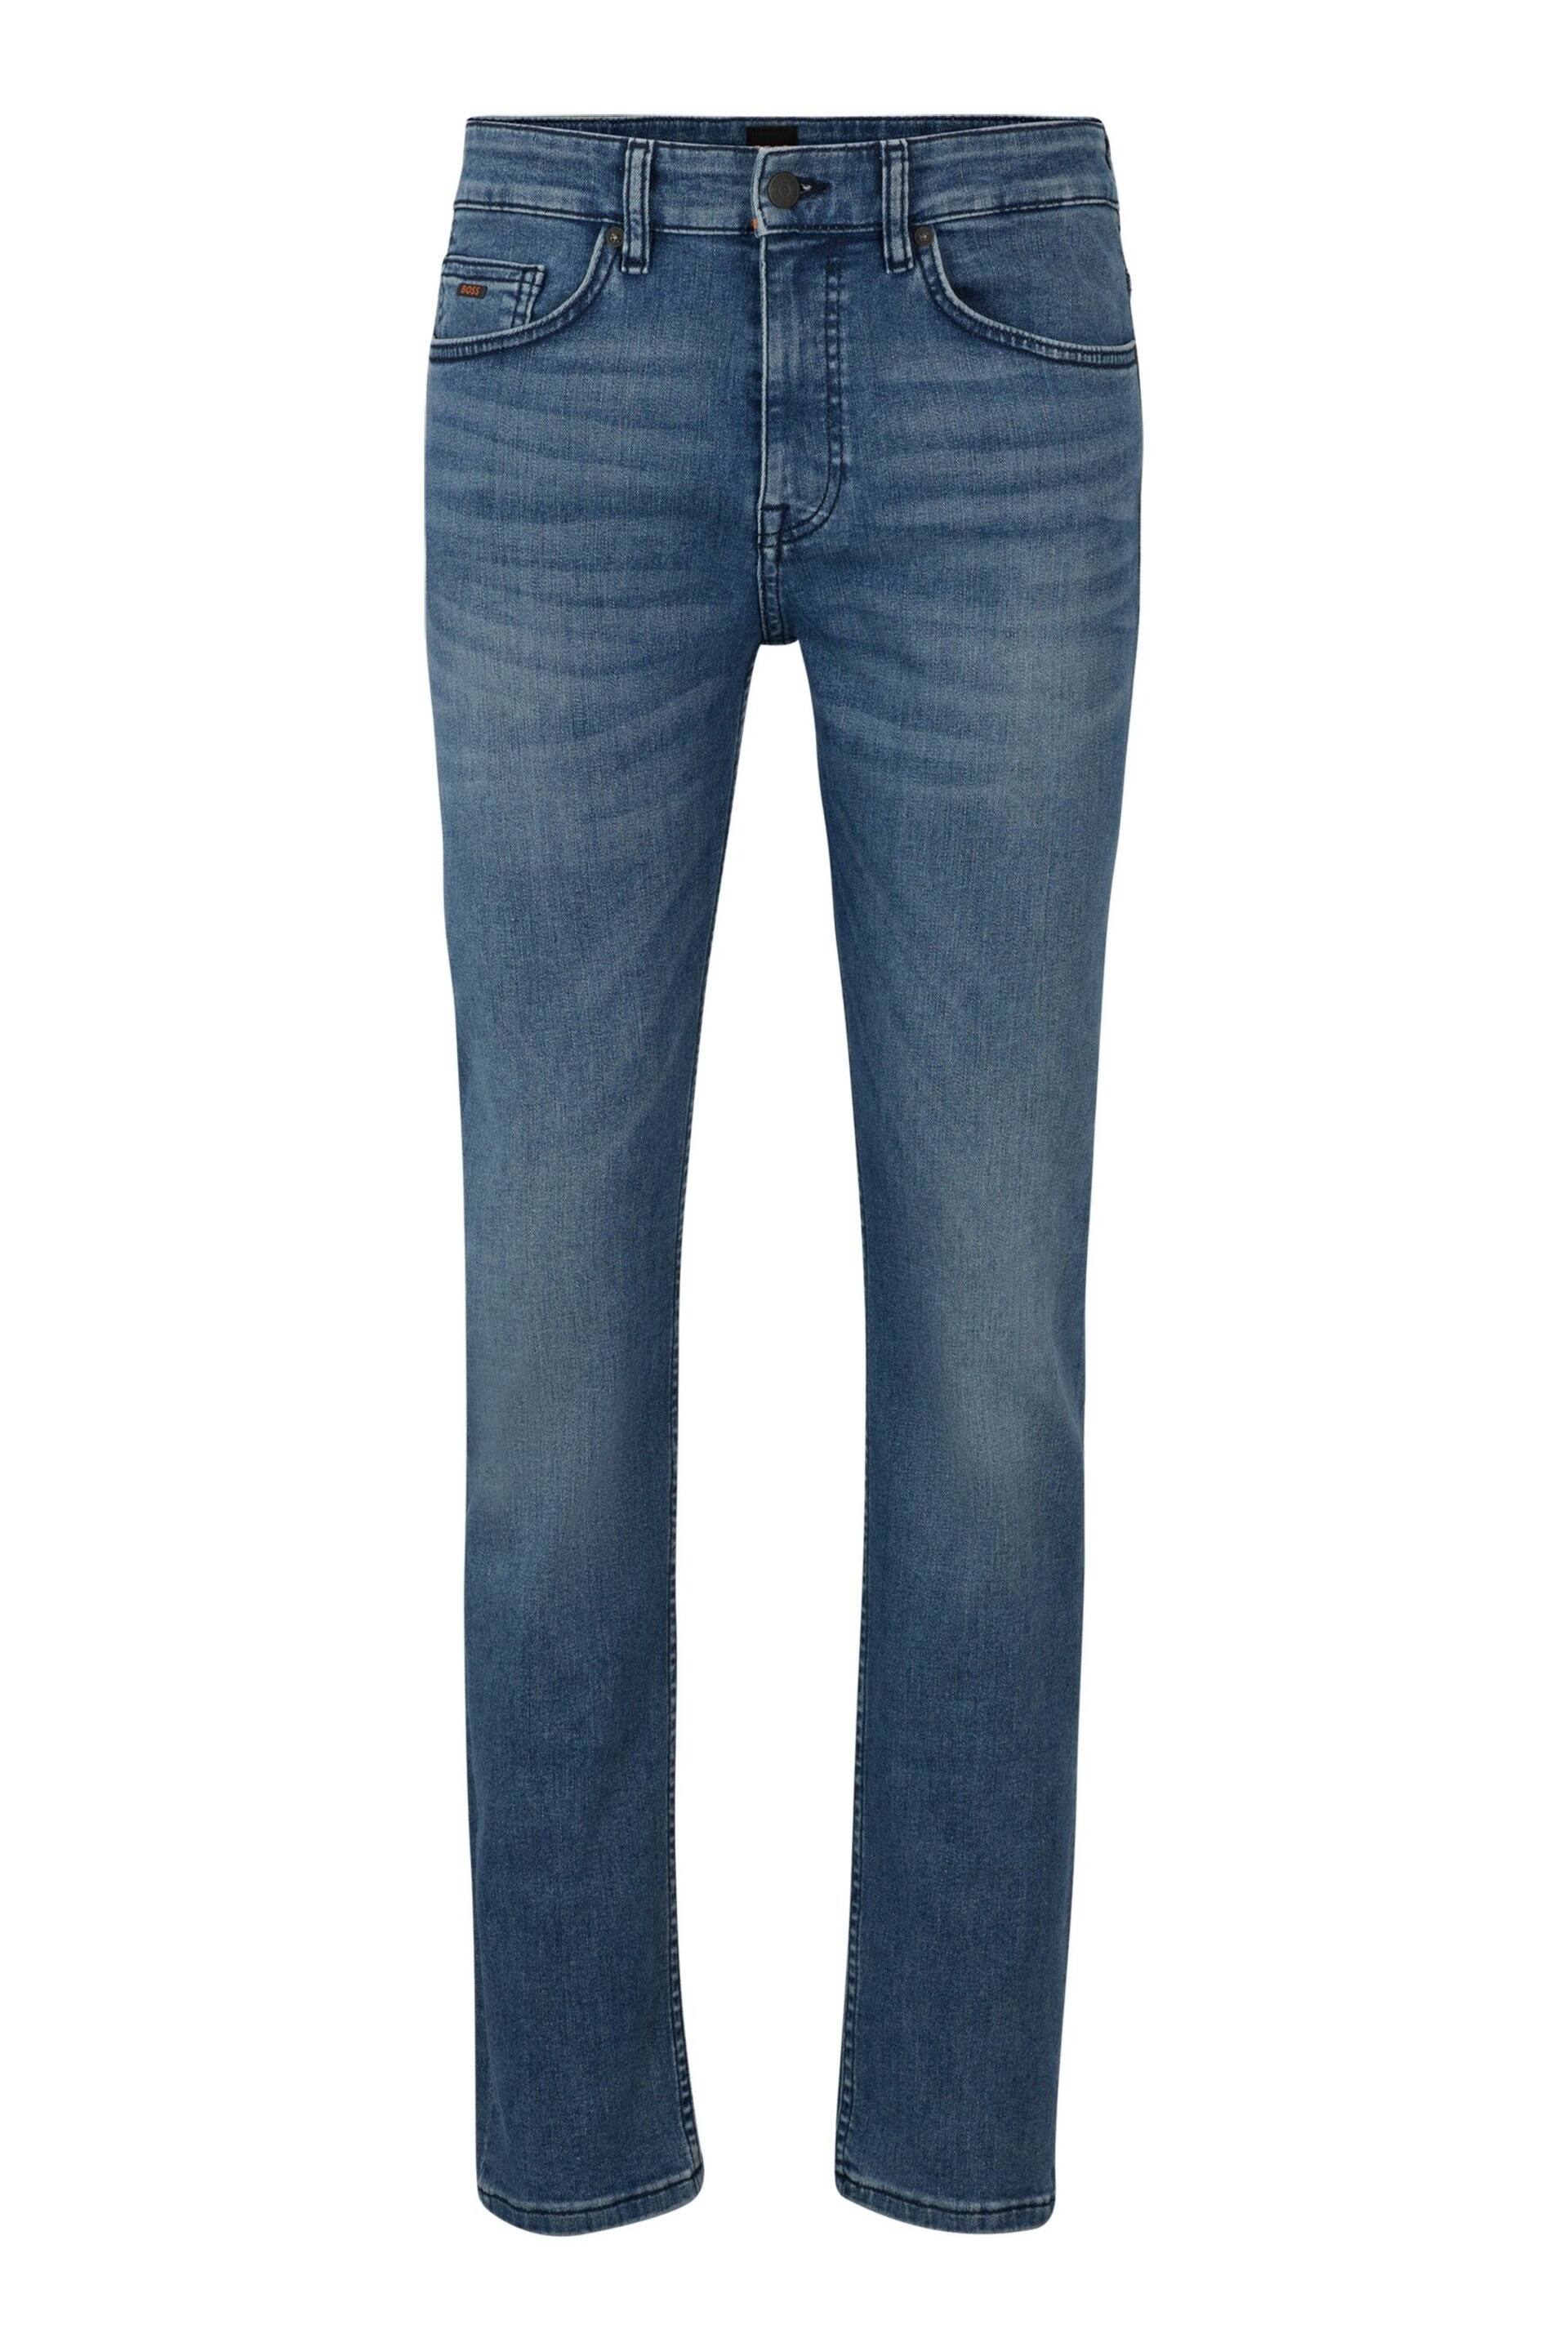 BOSS Blue Slim Fit Comfort Stretch Denim Jeans - Image 5 of 5